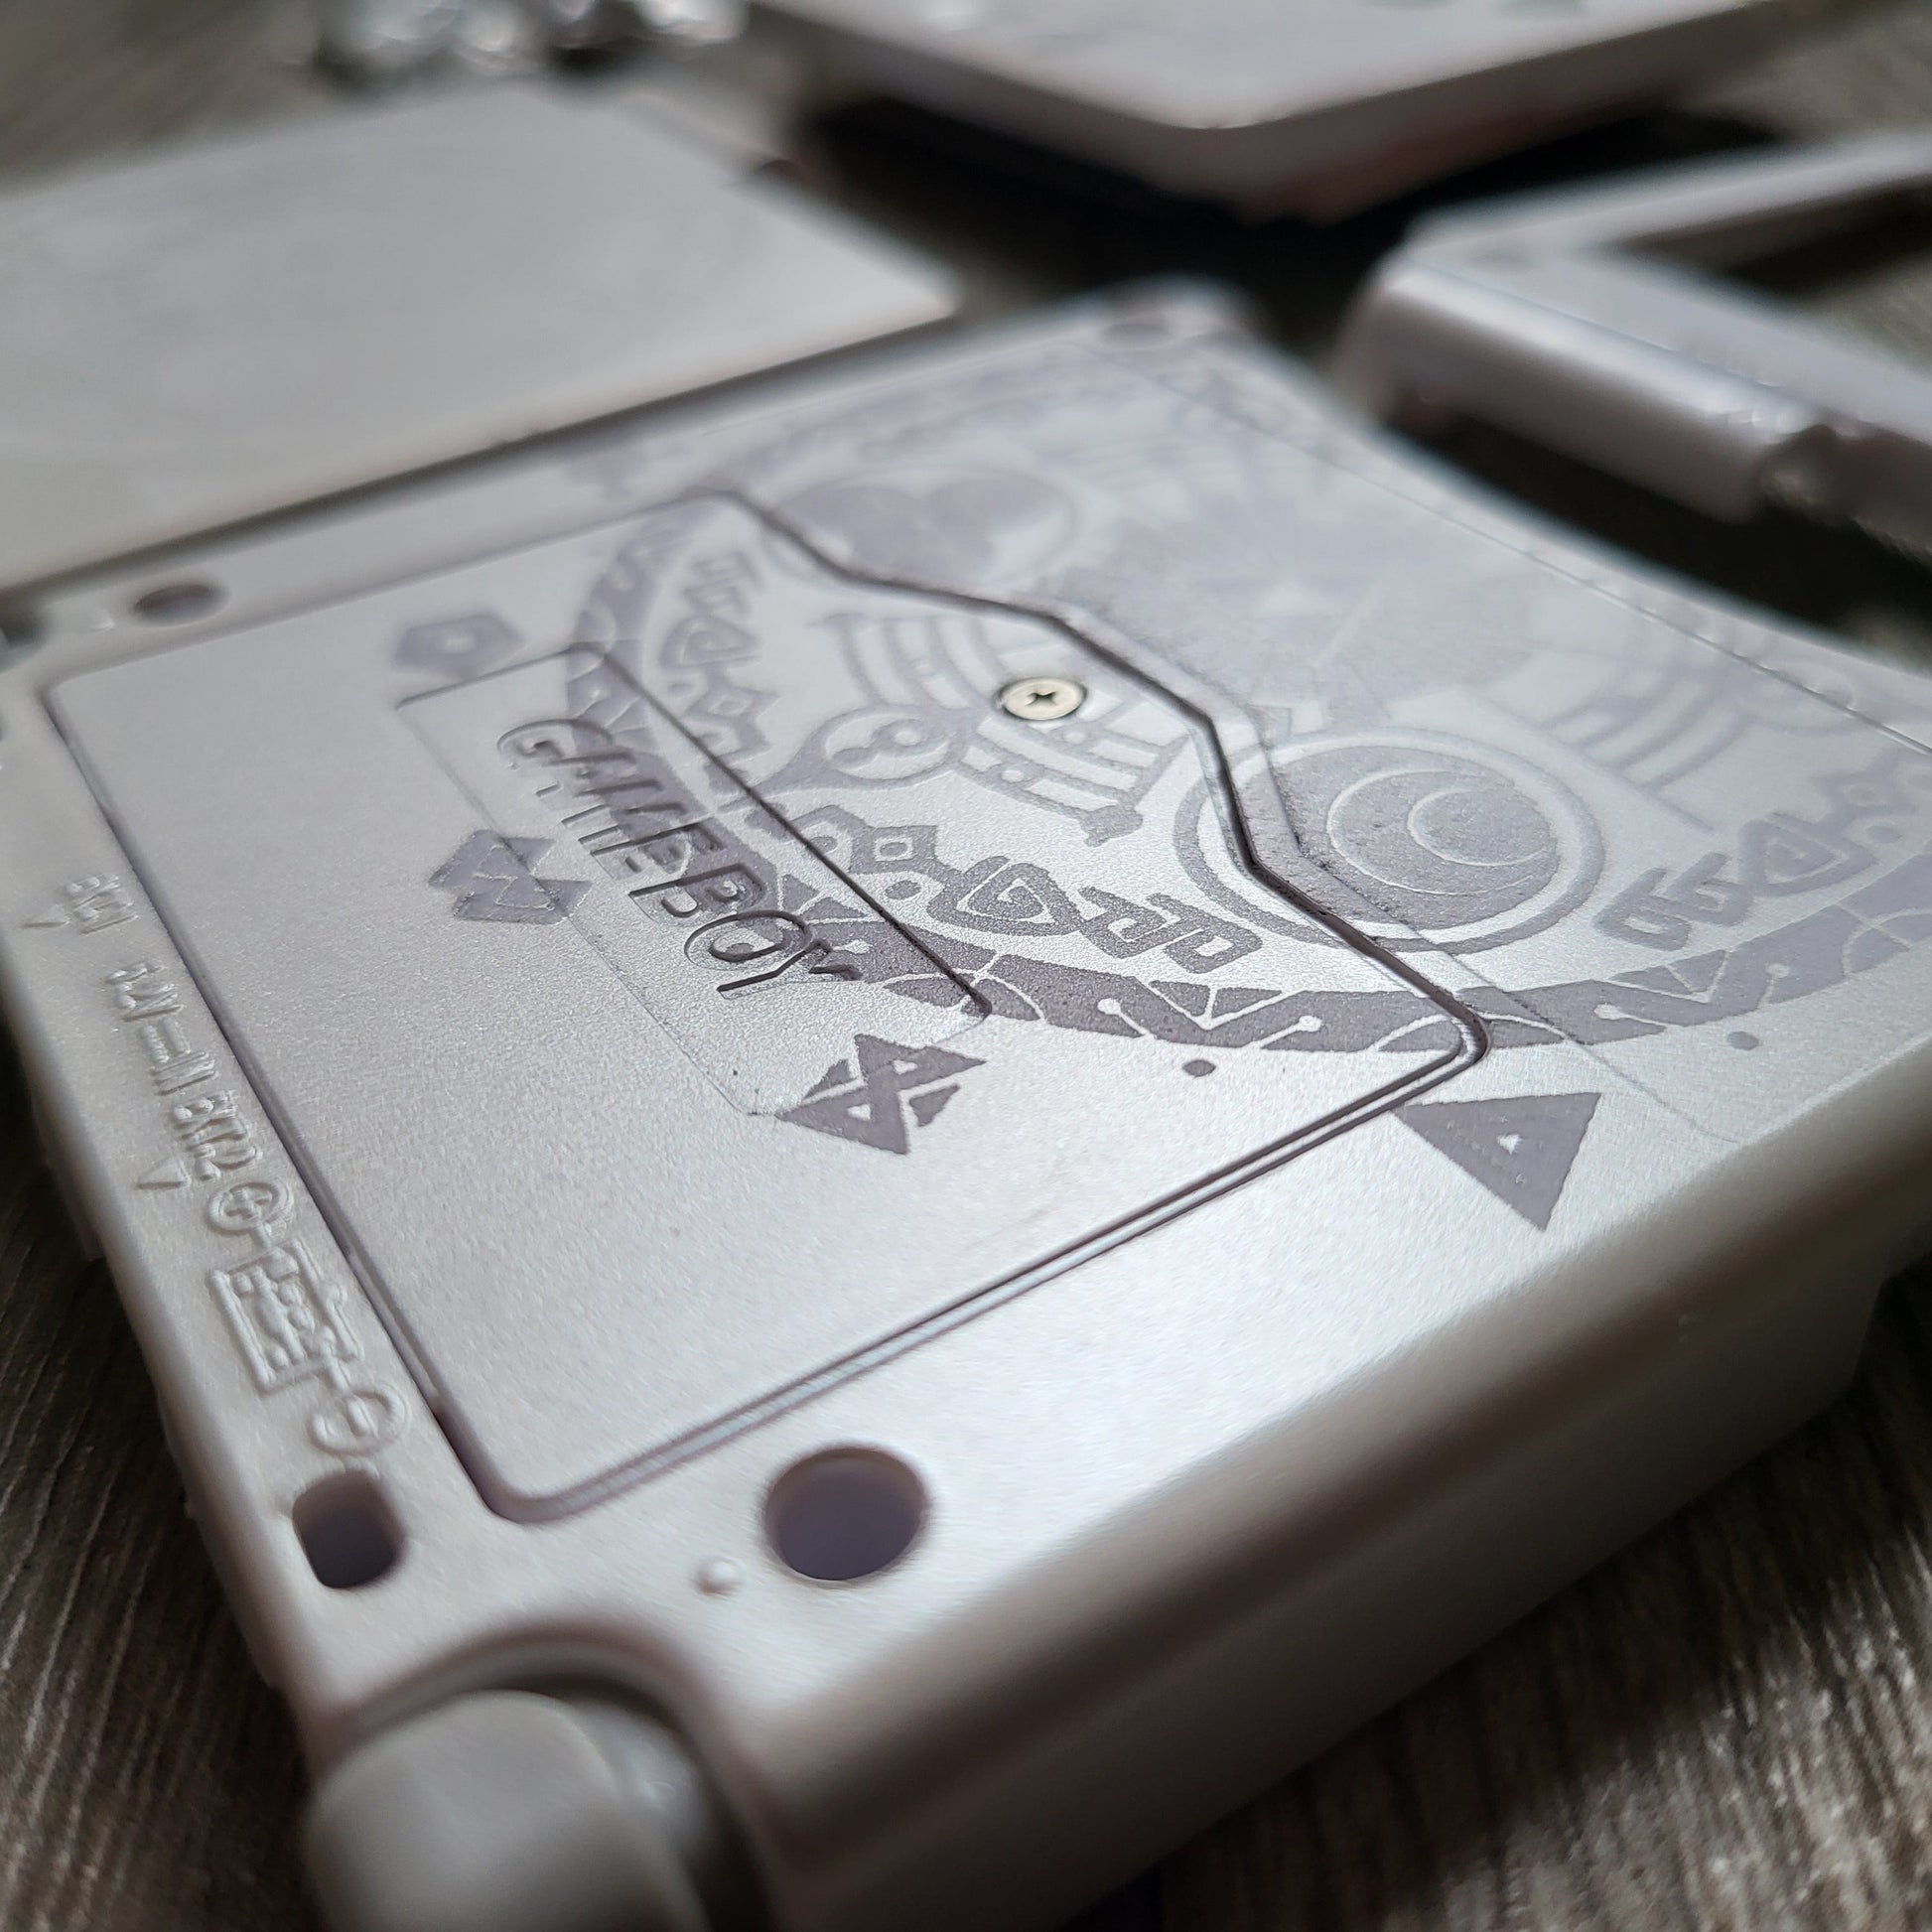 Custom shell cover for Nintendo with Zelda theme laser engravings